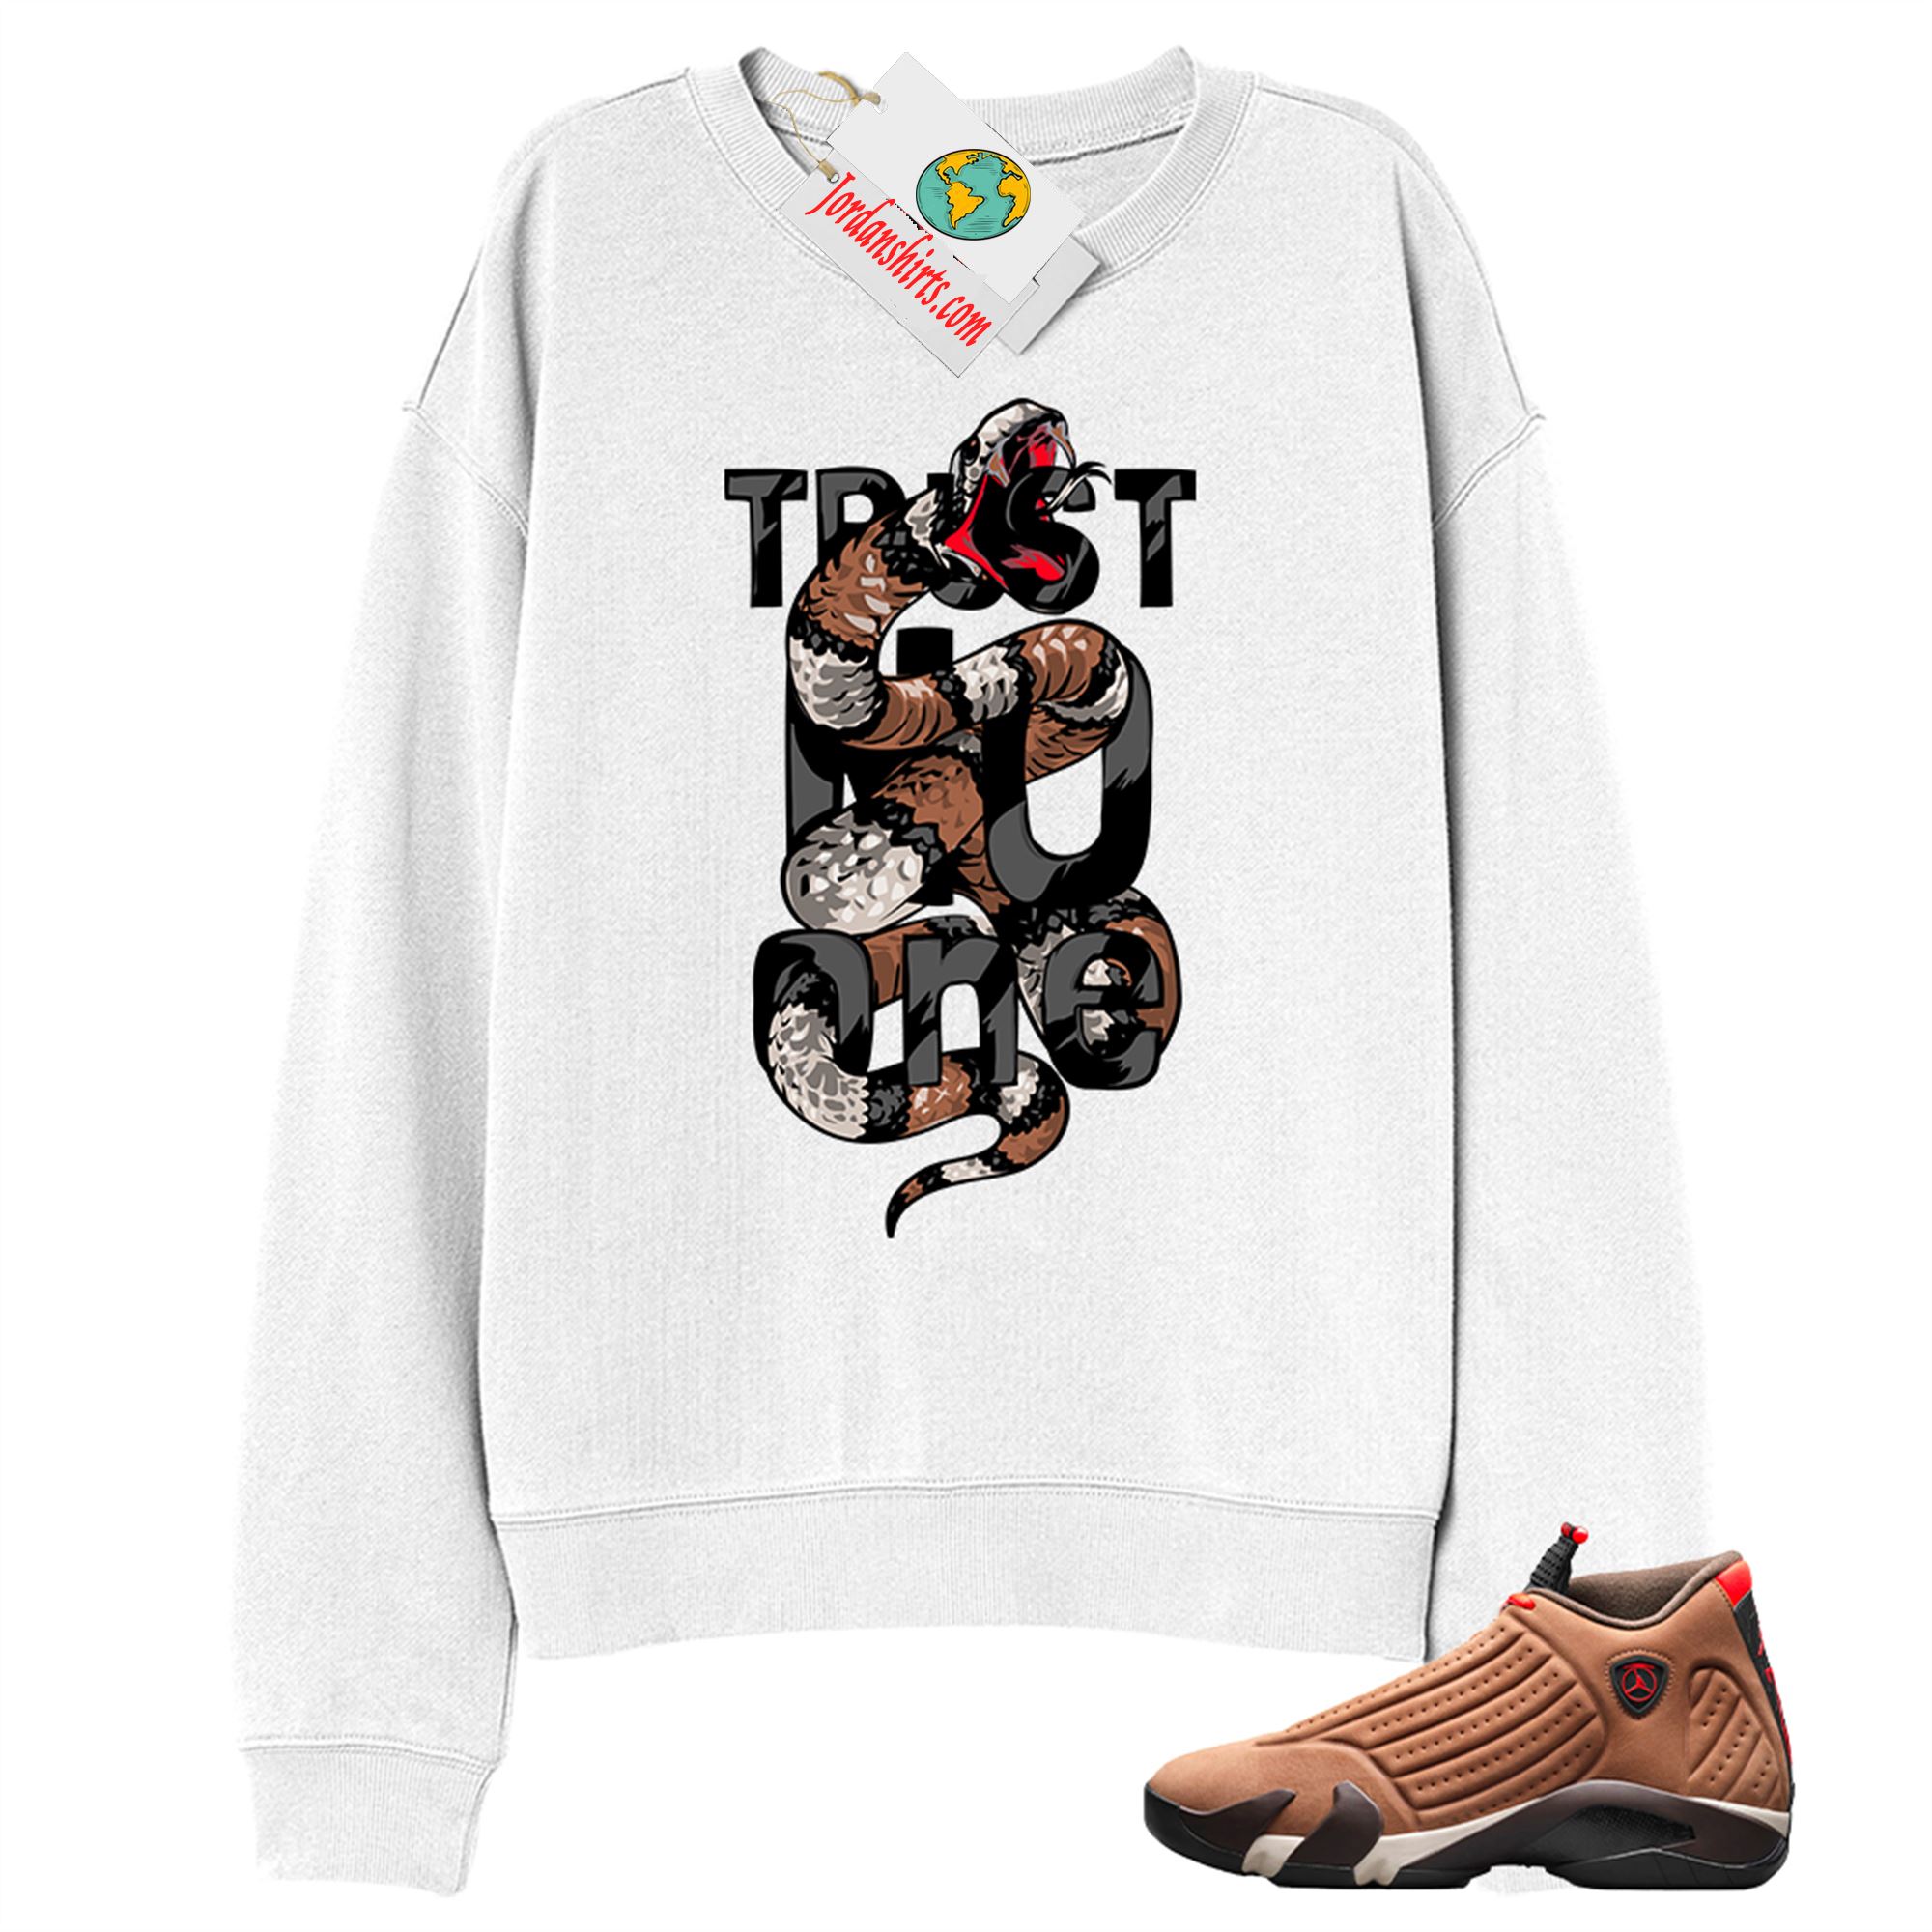 Jordan 14 Sweatshirt, Trust No One King Snake White Sweatshirt Air Jordan 14 Winterized 14s Full Size Up To 5xl